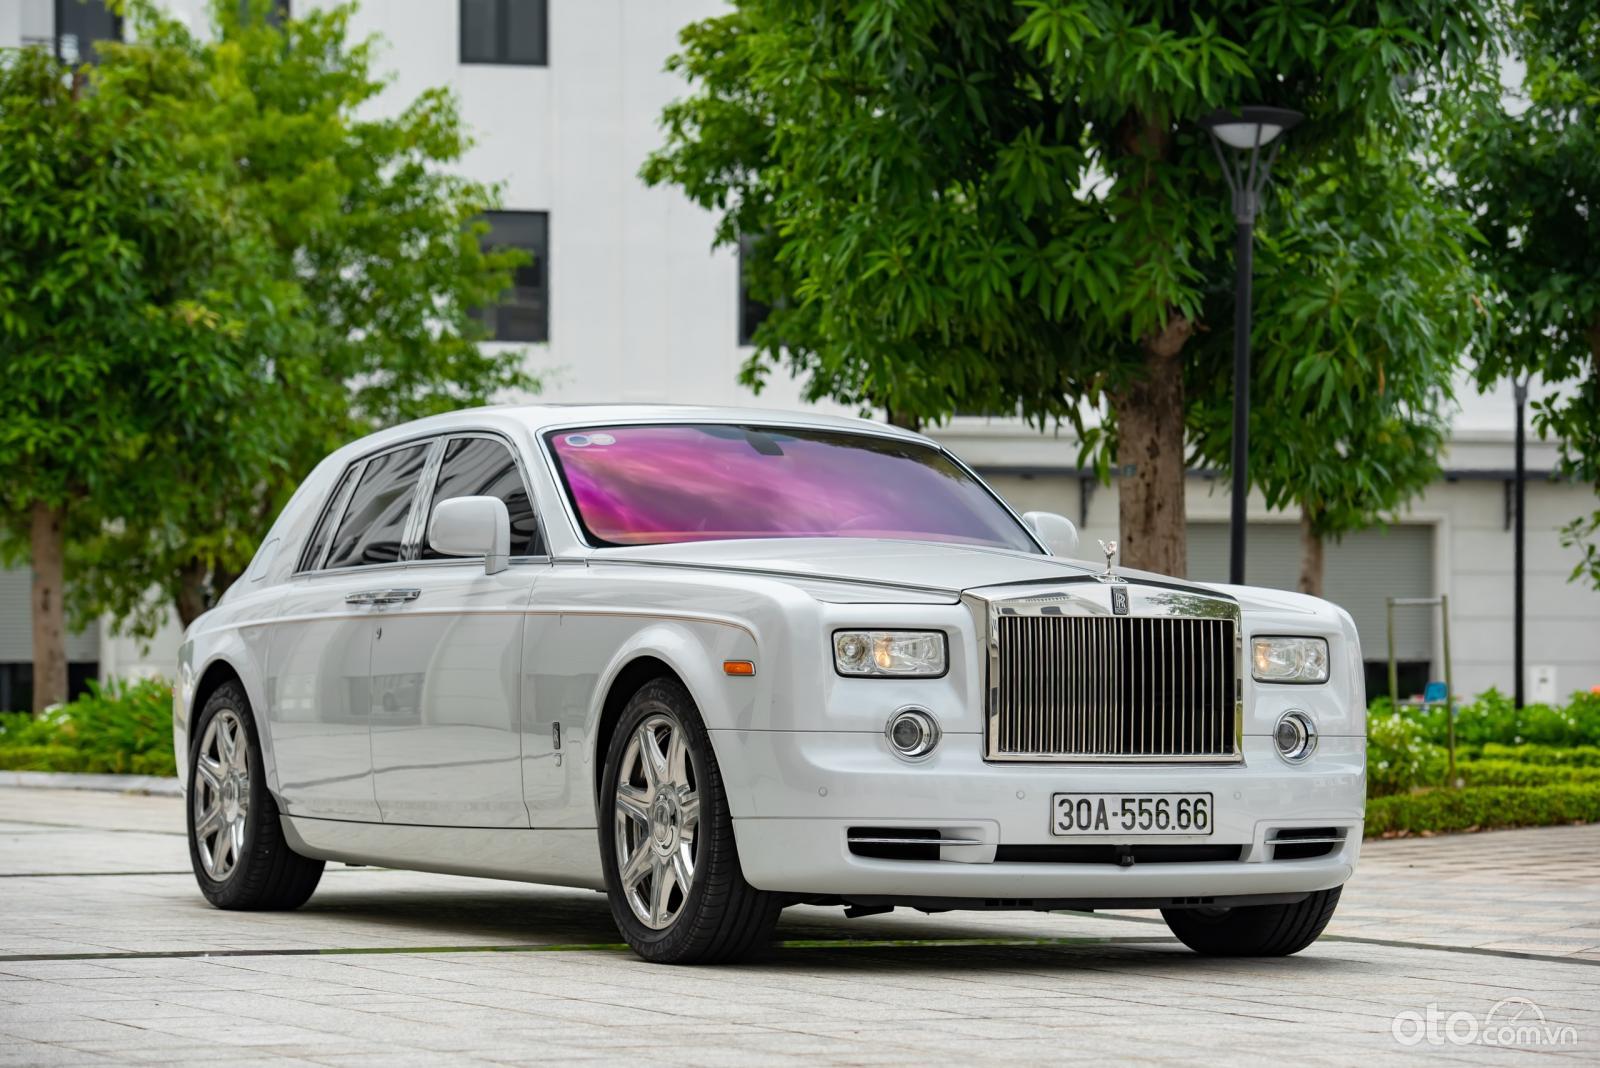 White RollsRoyce Phantom Series II available for Weddings in London